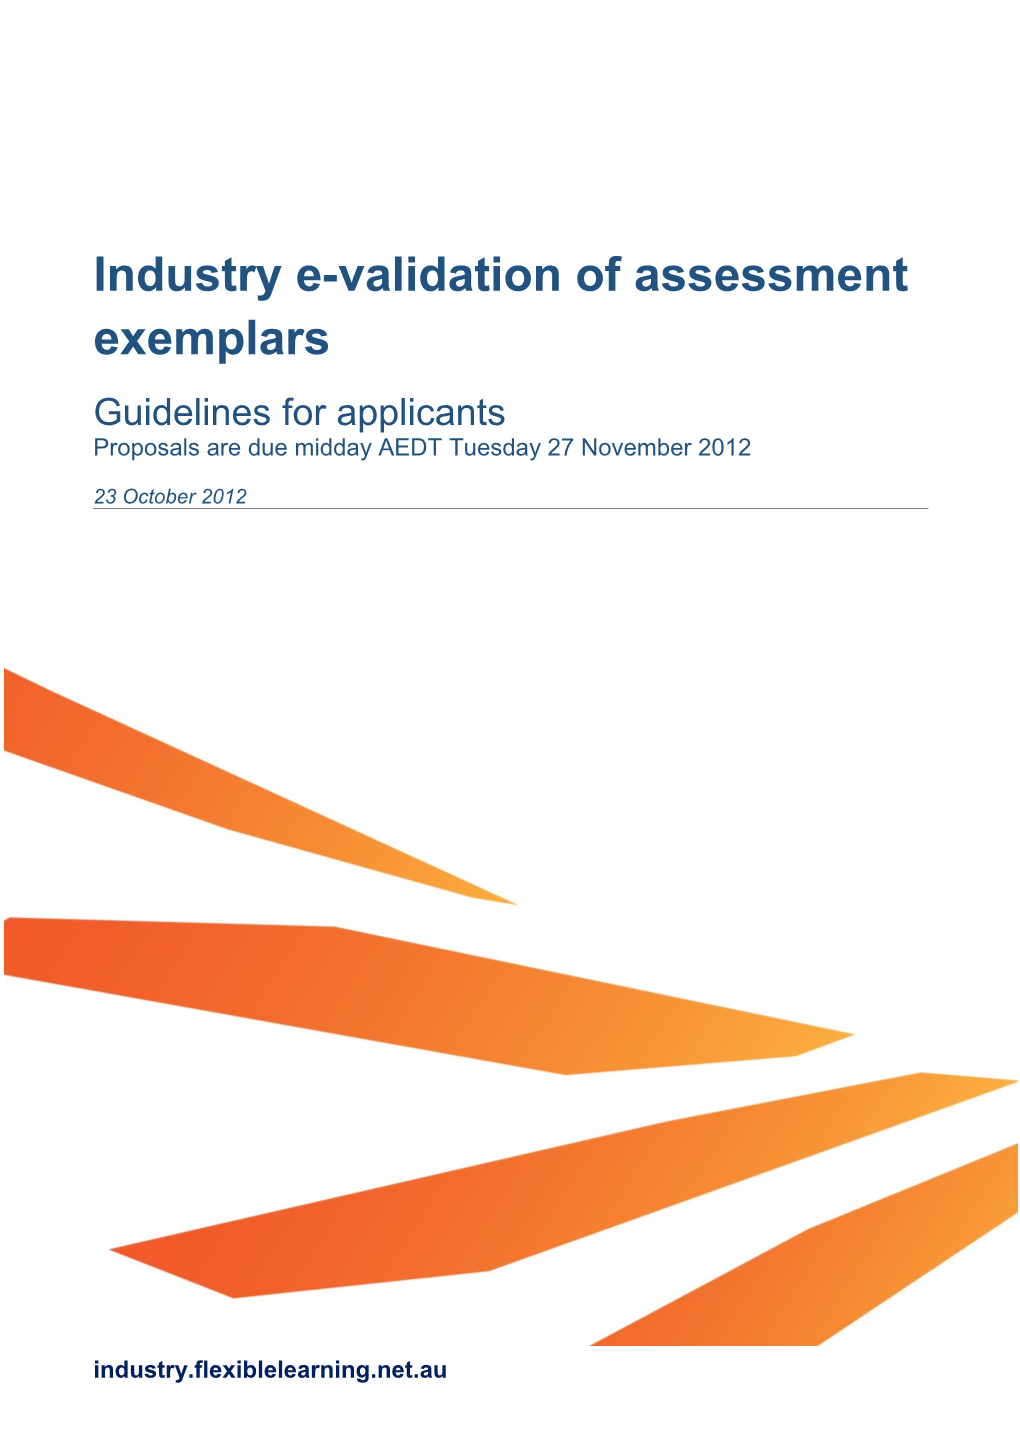 Industry E-Validation of Assessment Exemplars